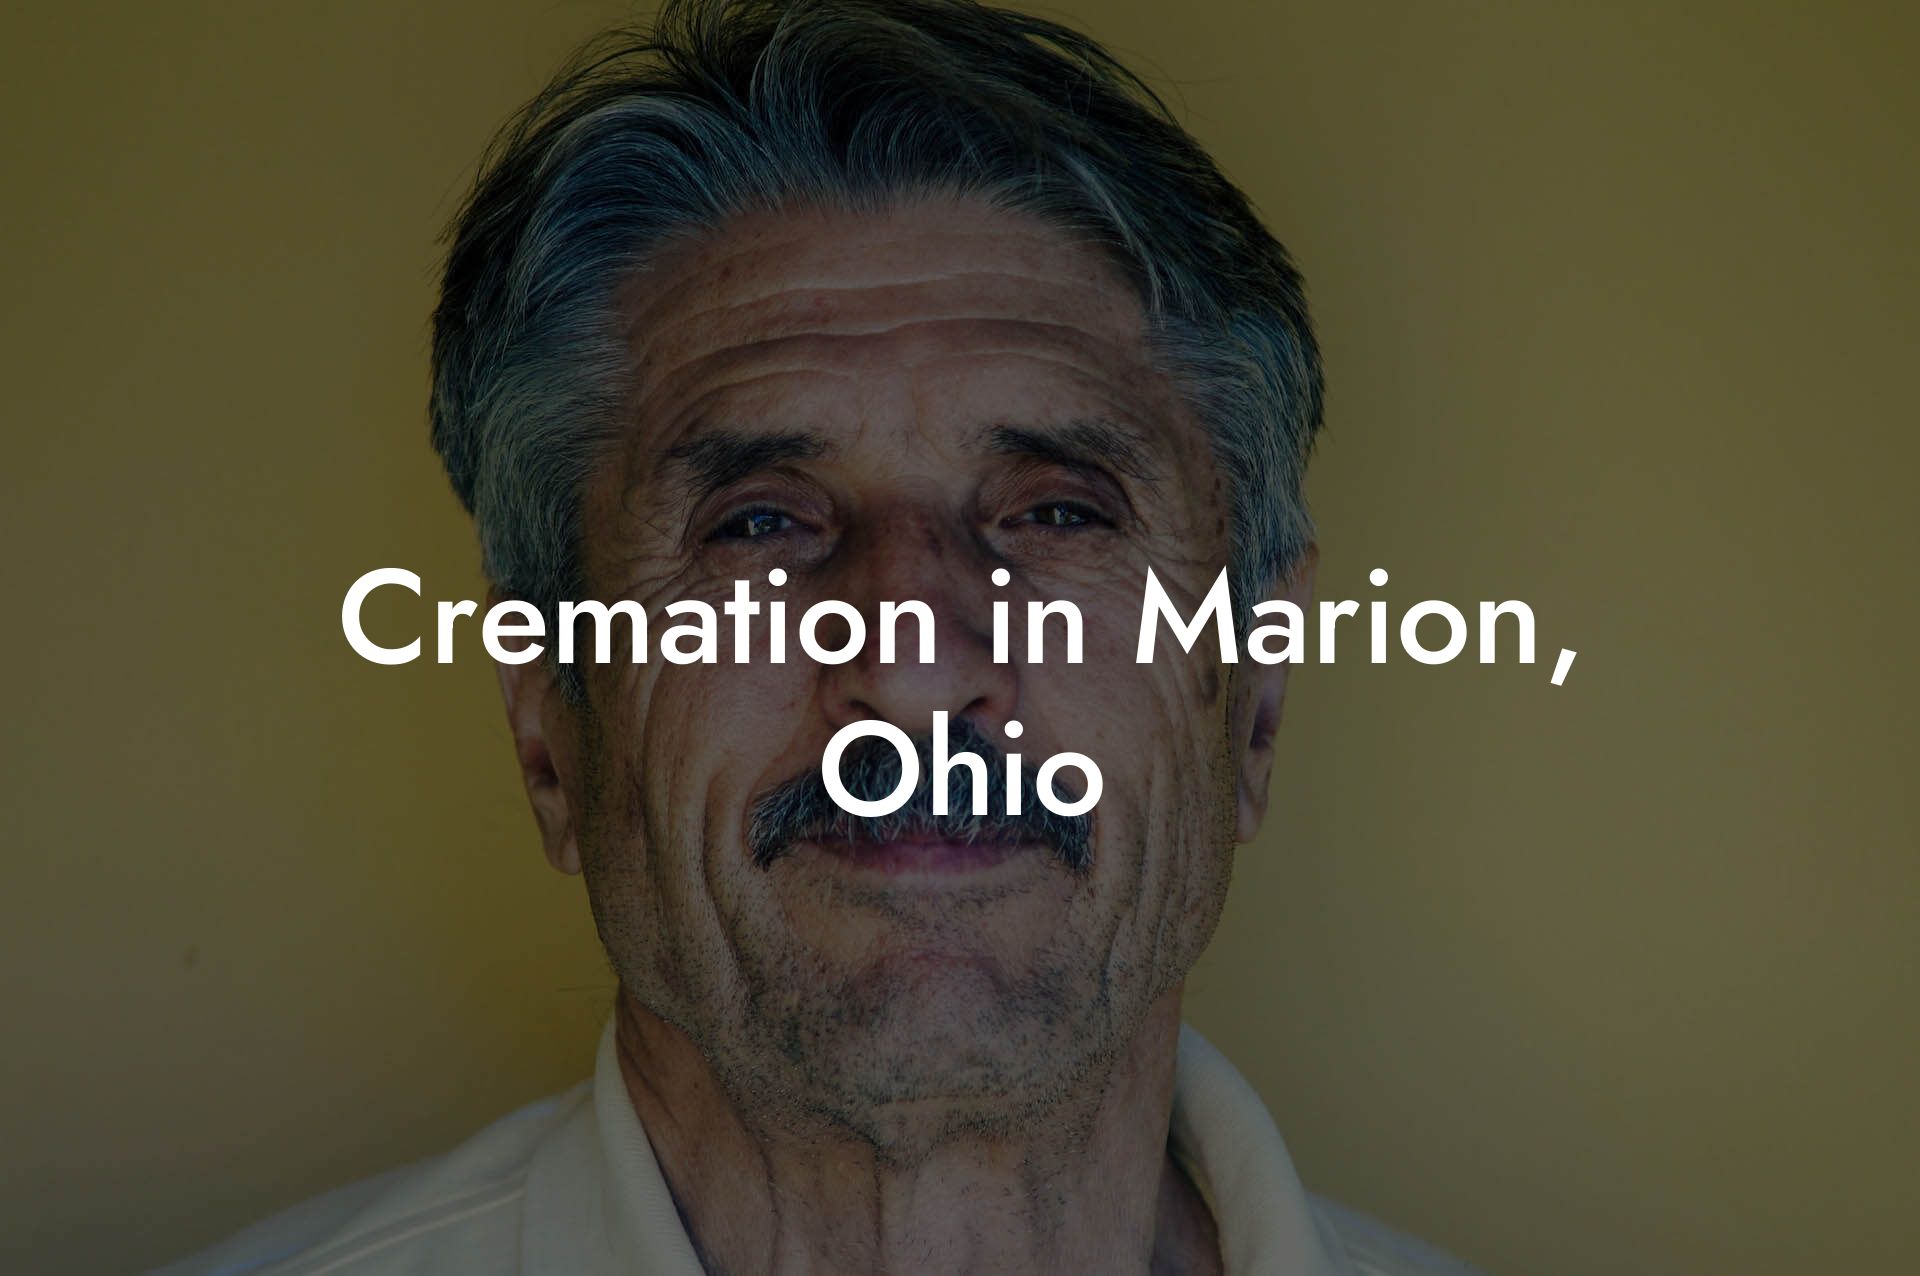 Cremation in Marion, Ohio